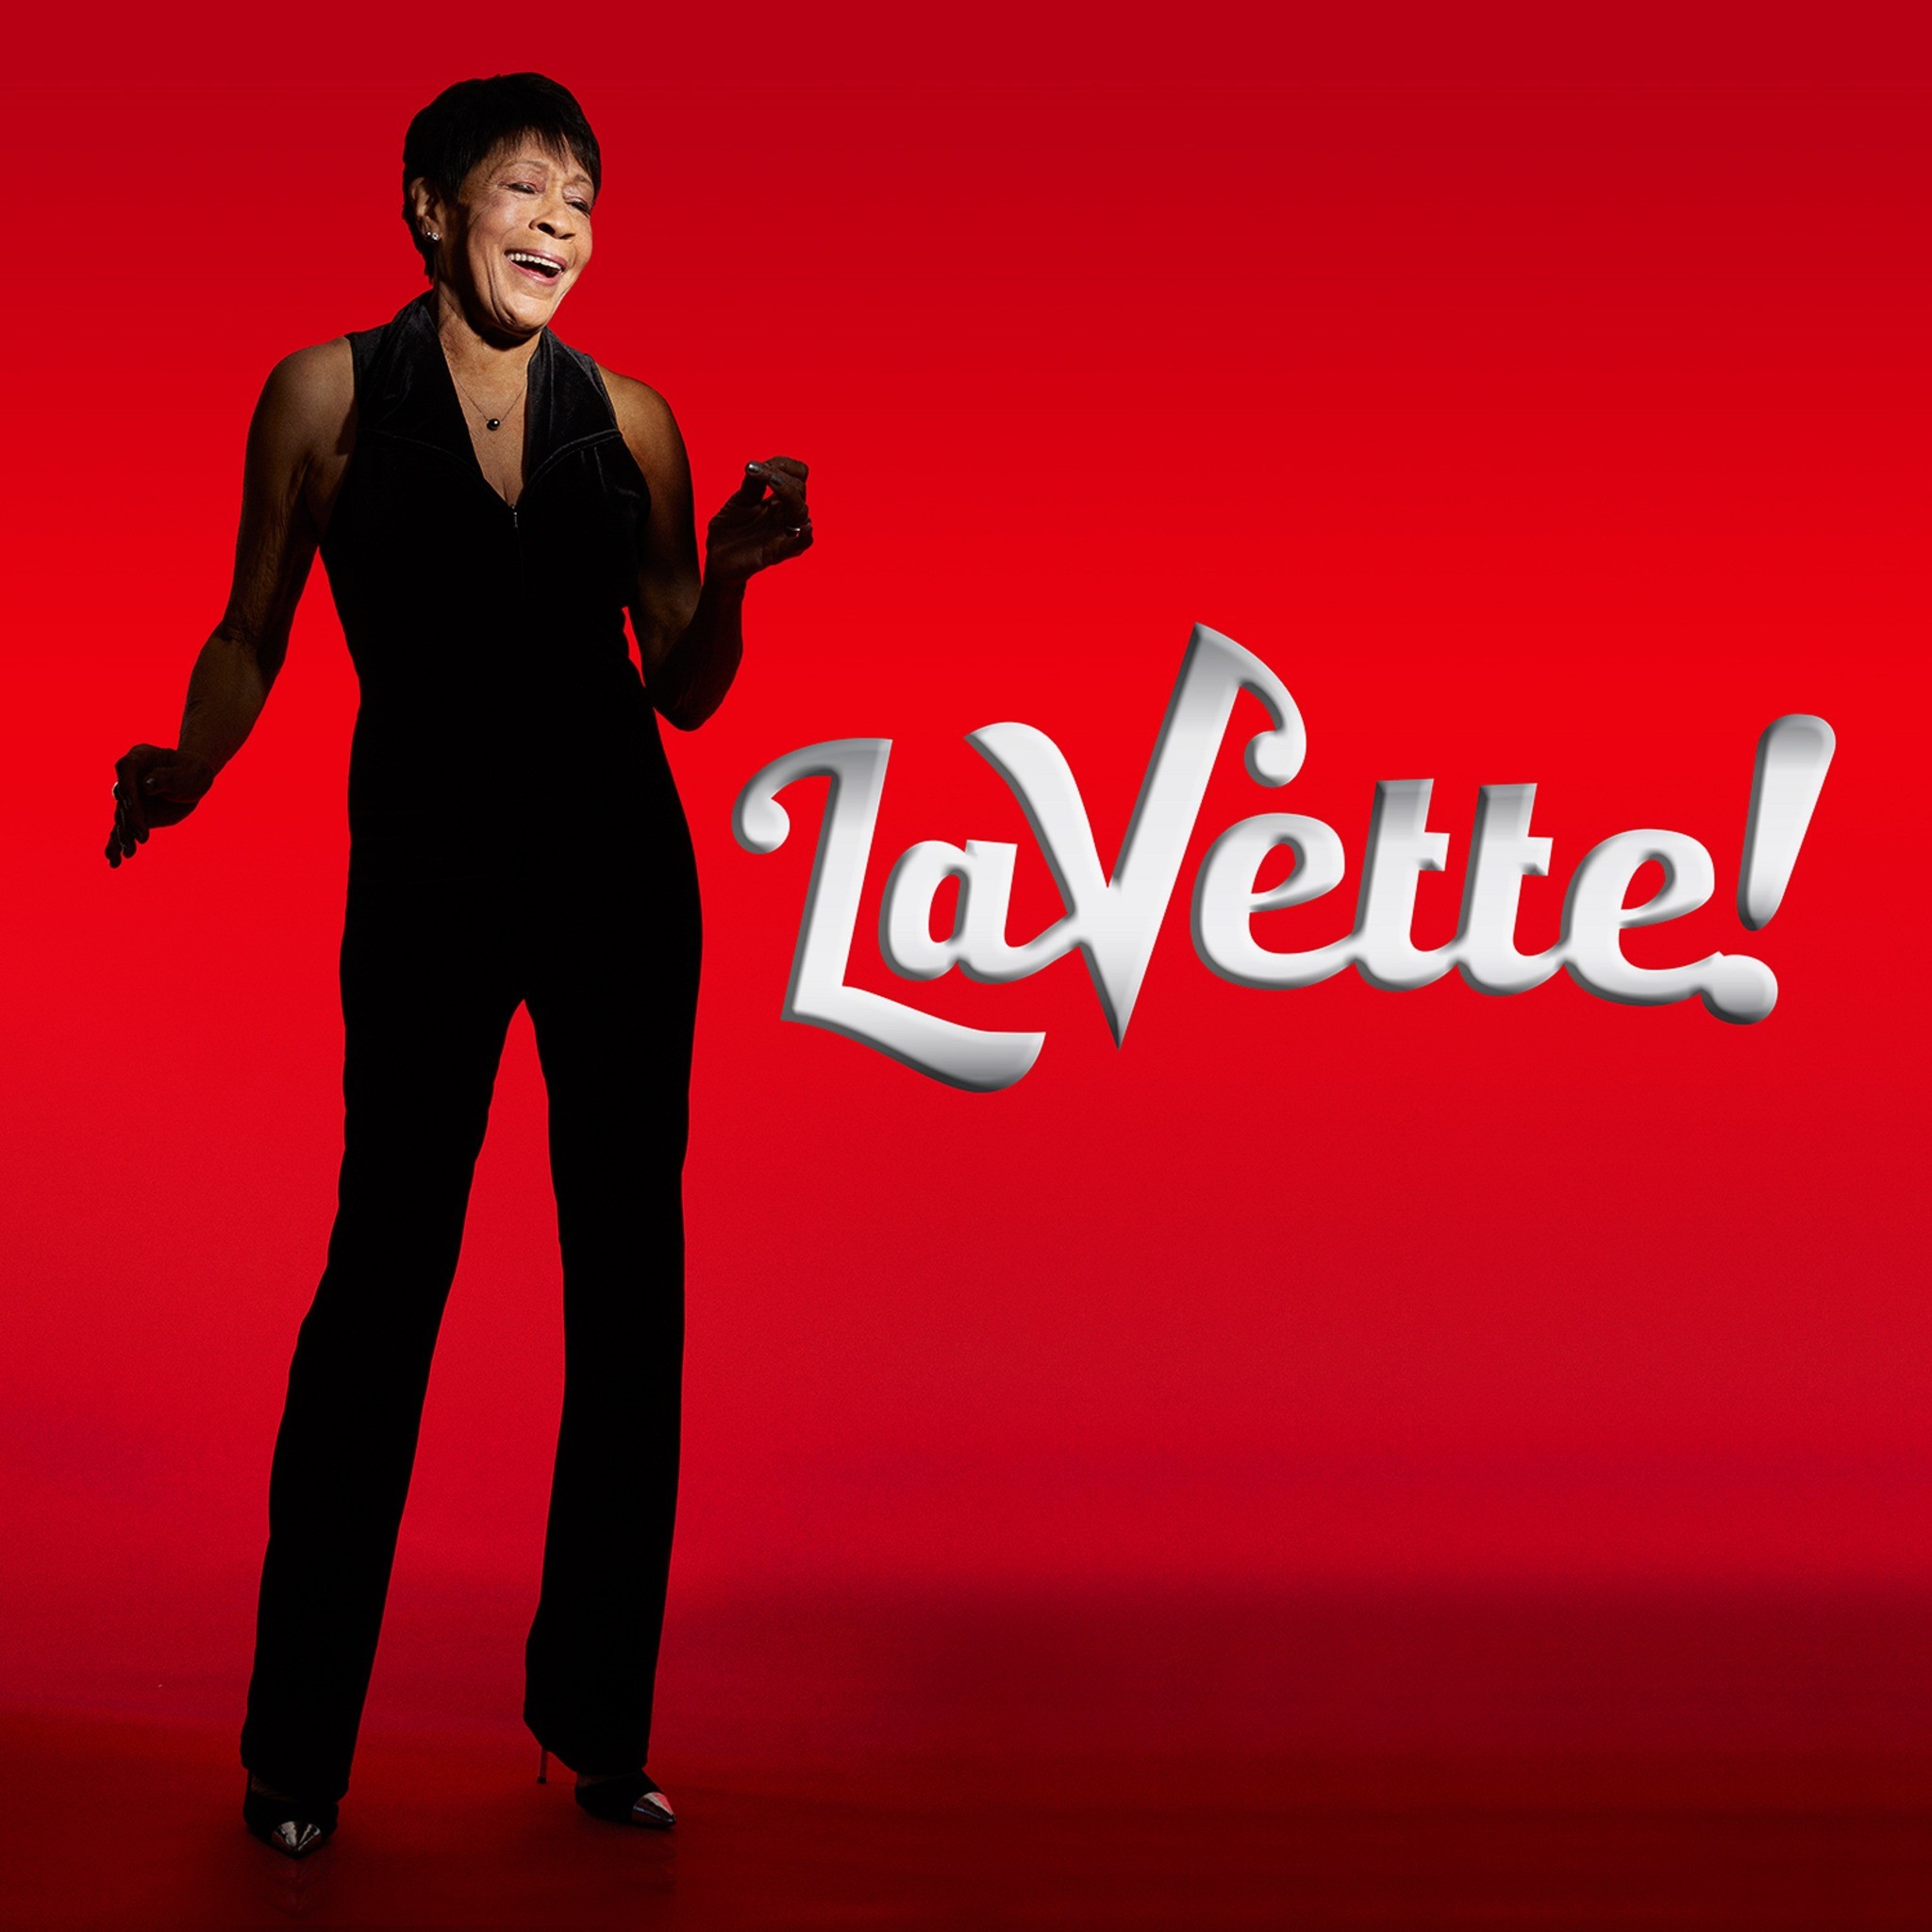 Betty LaVette - LaVette!